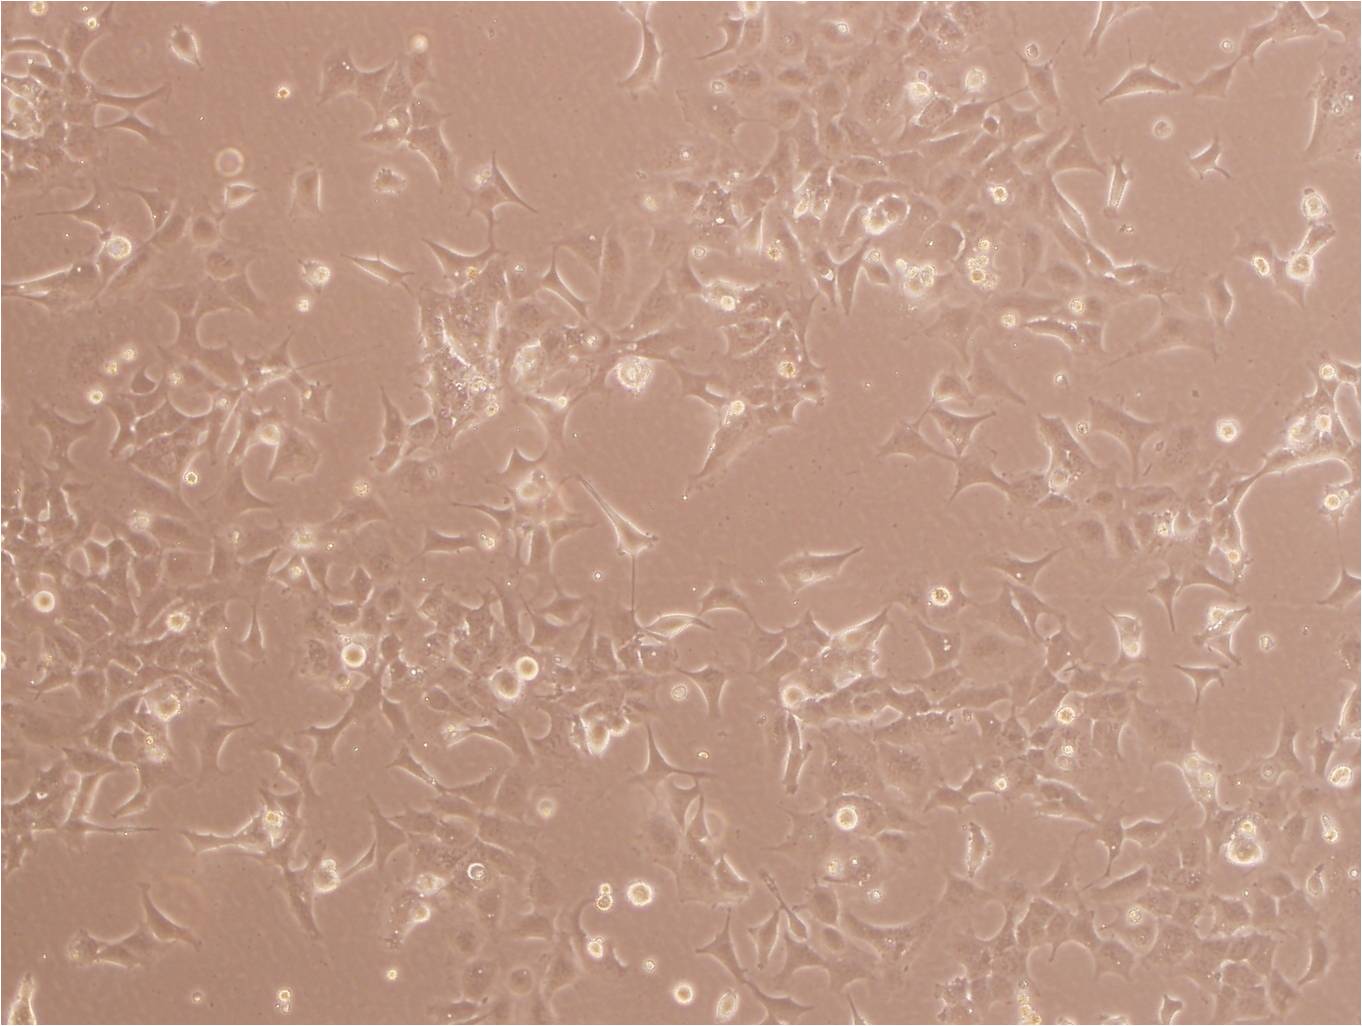 UPCI-SCC-090:人口腔鳞癌复苏细胞(提供STR鉴定图谱),UPCI-SCC-090